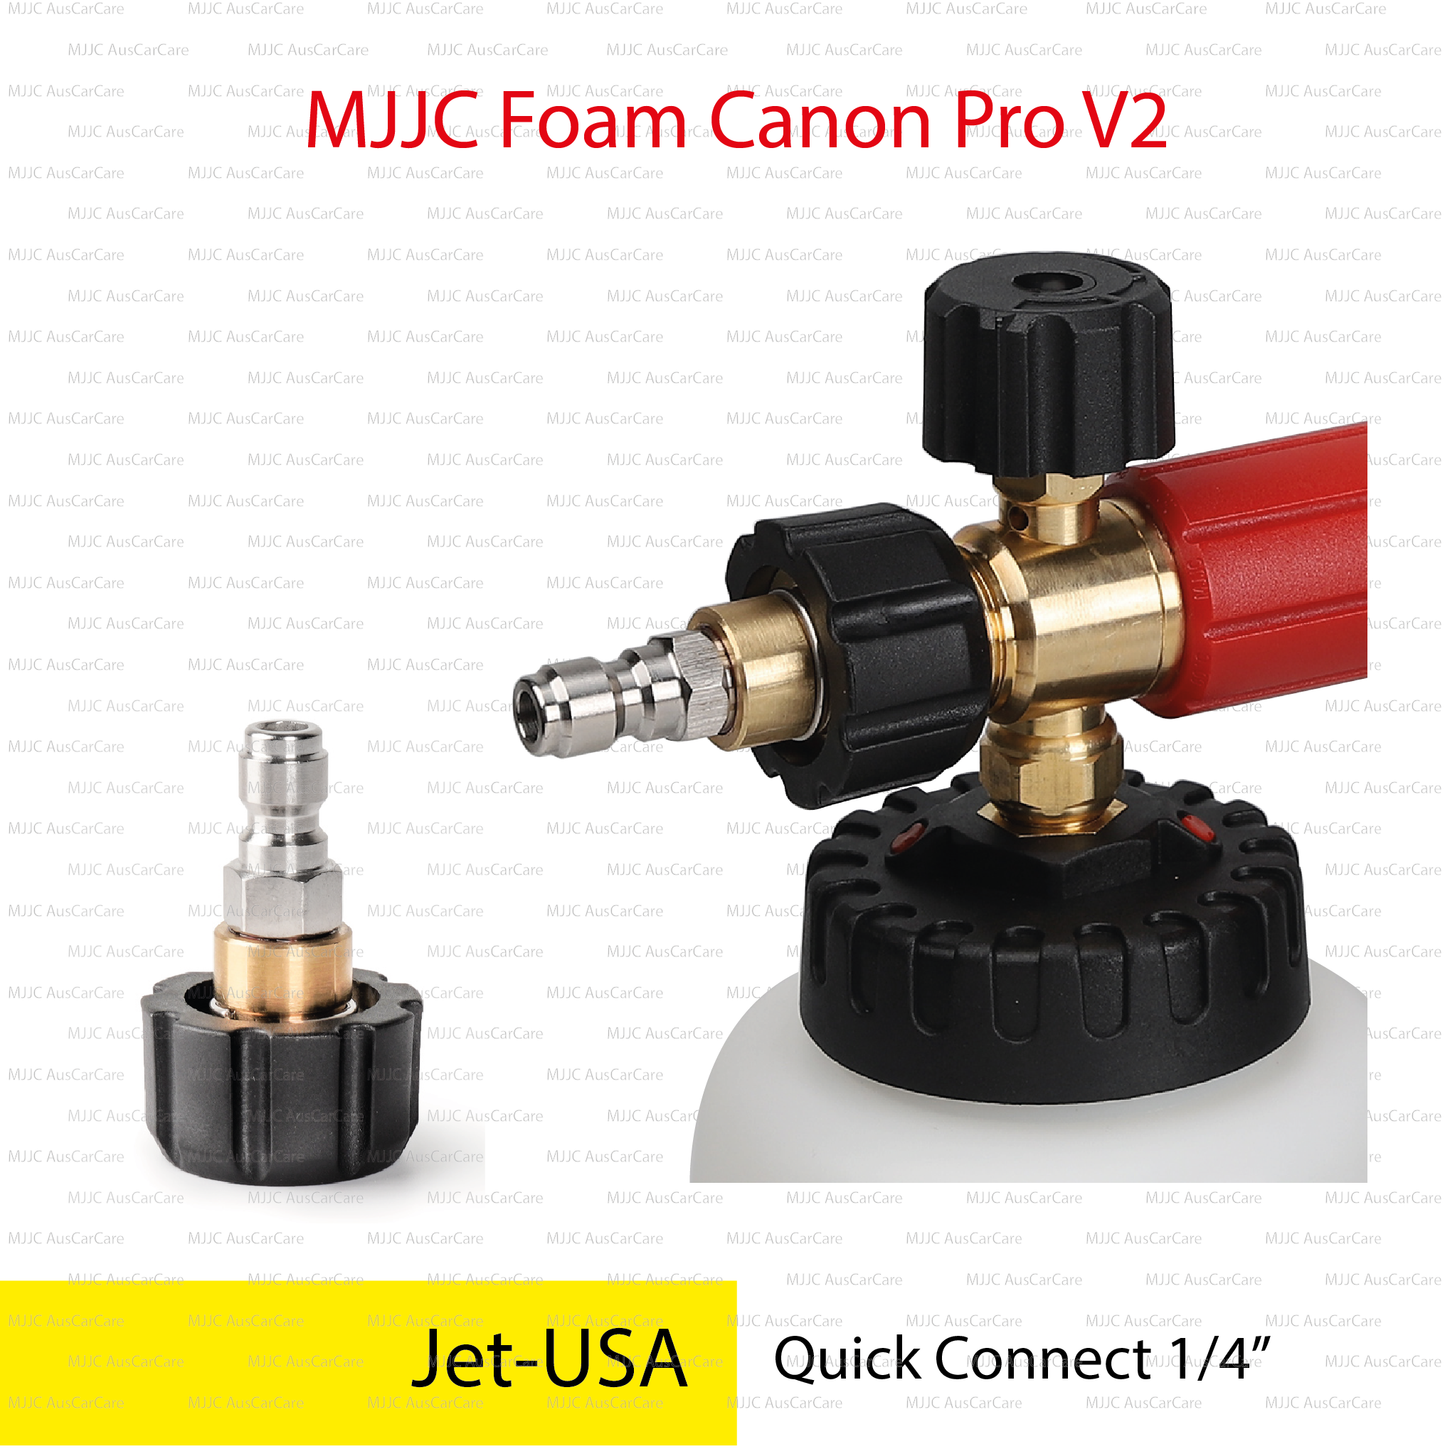 Jet-USA#2 (QRPROCN) Adapter for MJJC Foam Cannon Pro V2 (QRFLPRO)